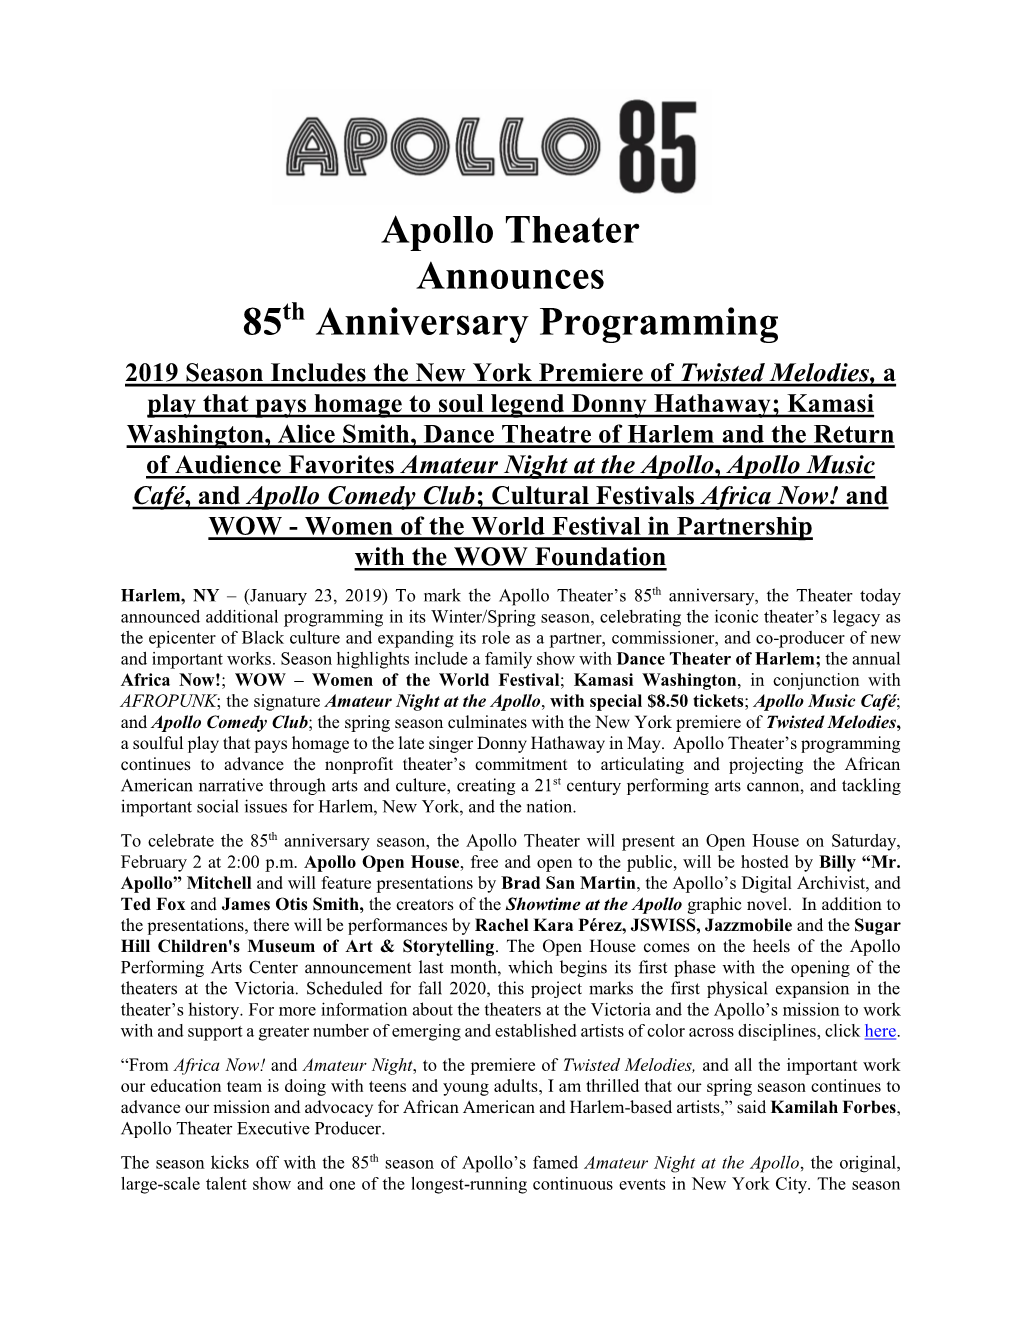 Apollo Theater Announces 85Th Anniversary Programming for Spring 2019